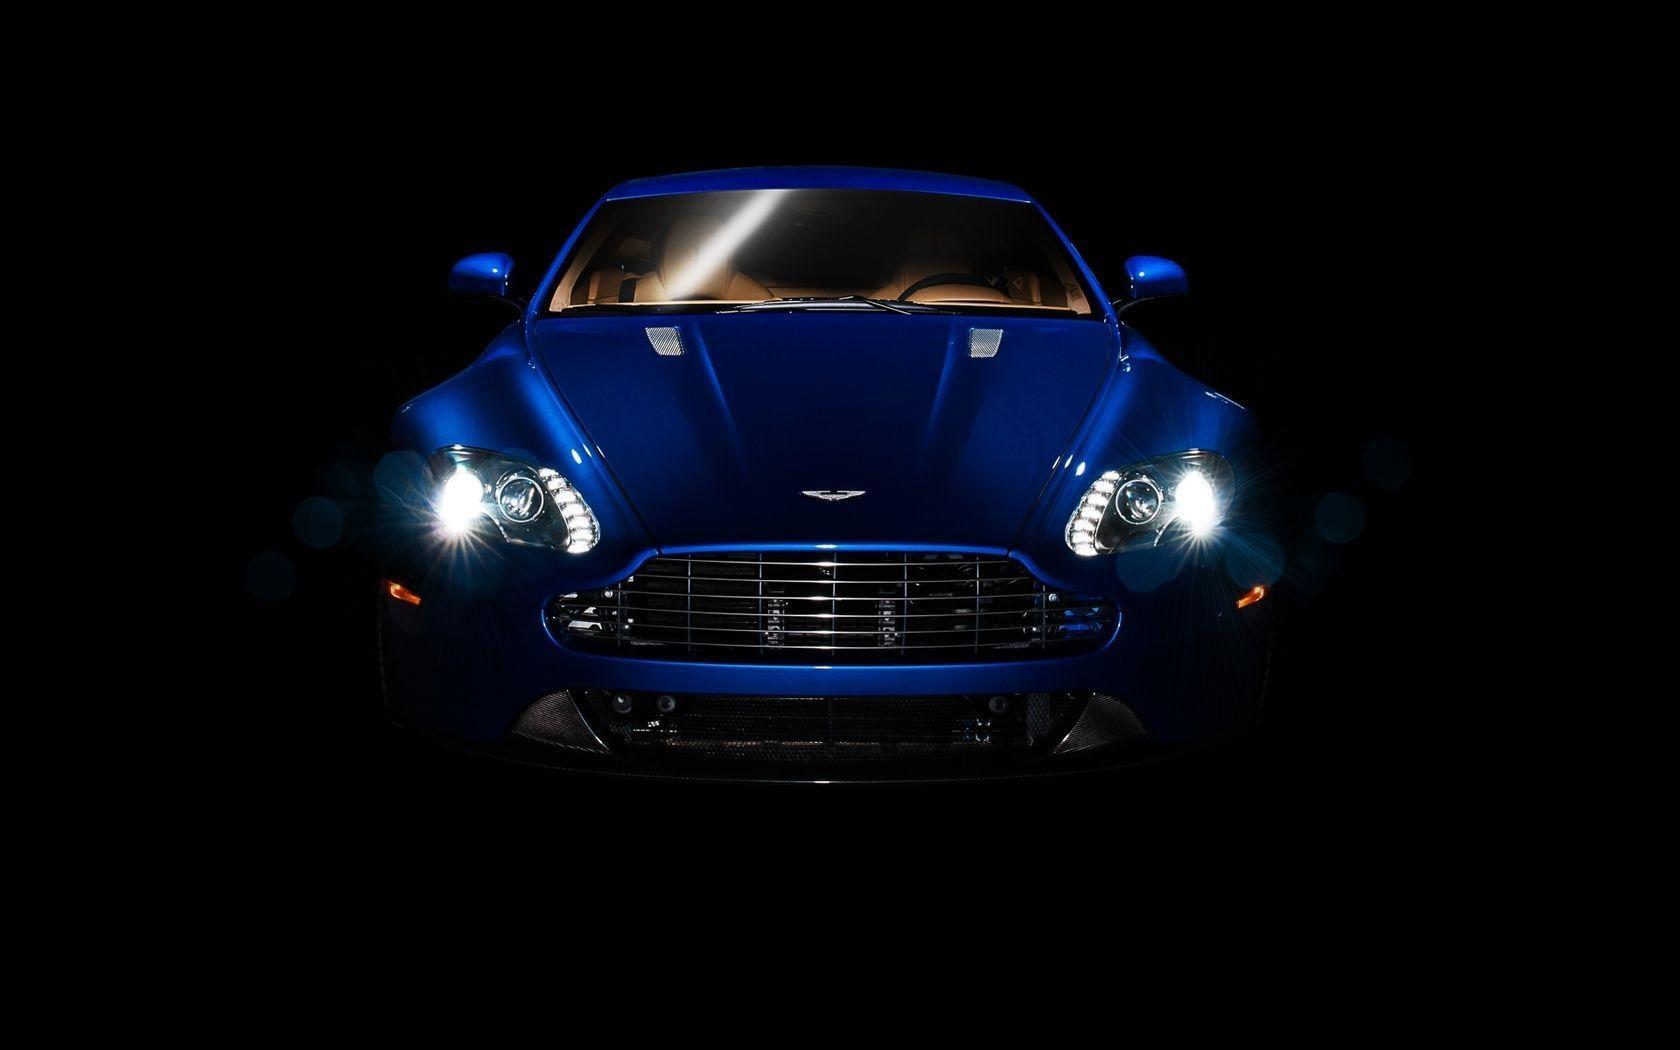 Aston martin blue car wallpaper in 1680×1050 resolution of 330720